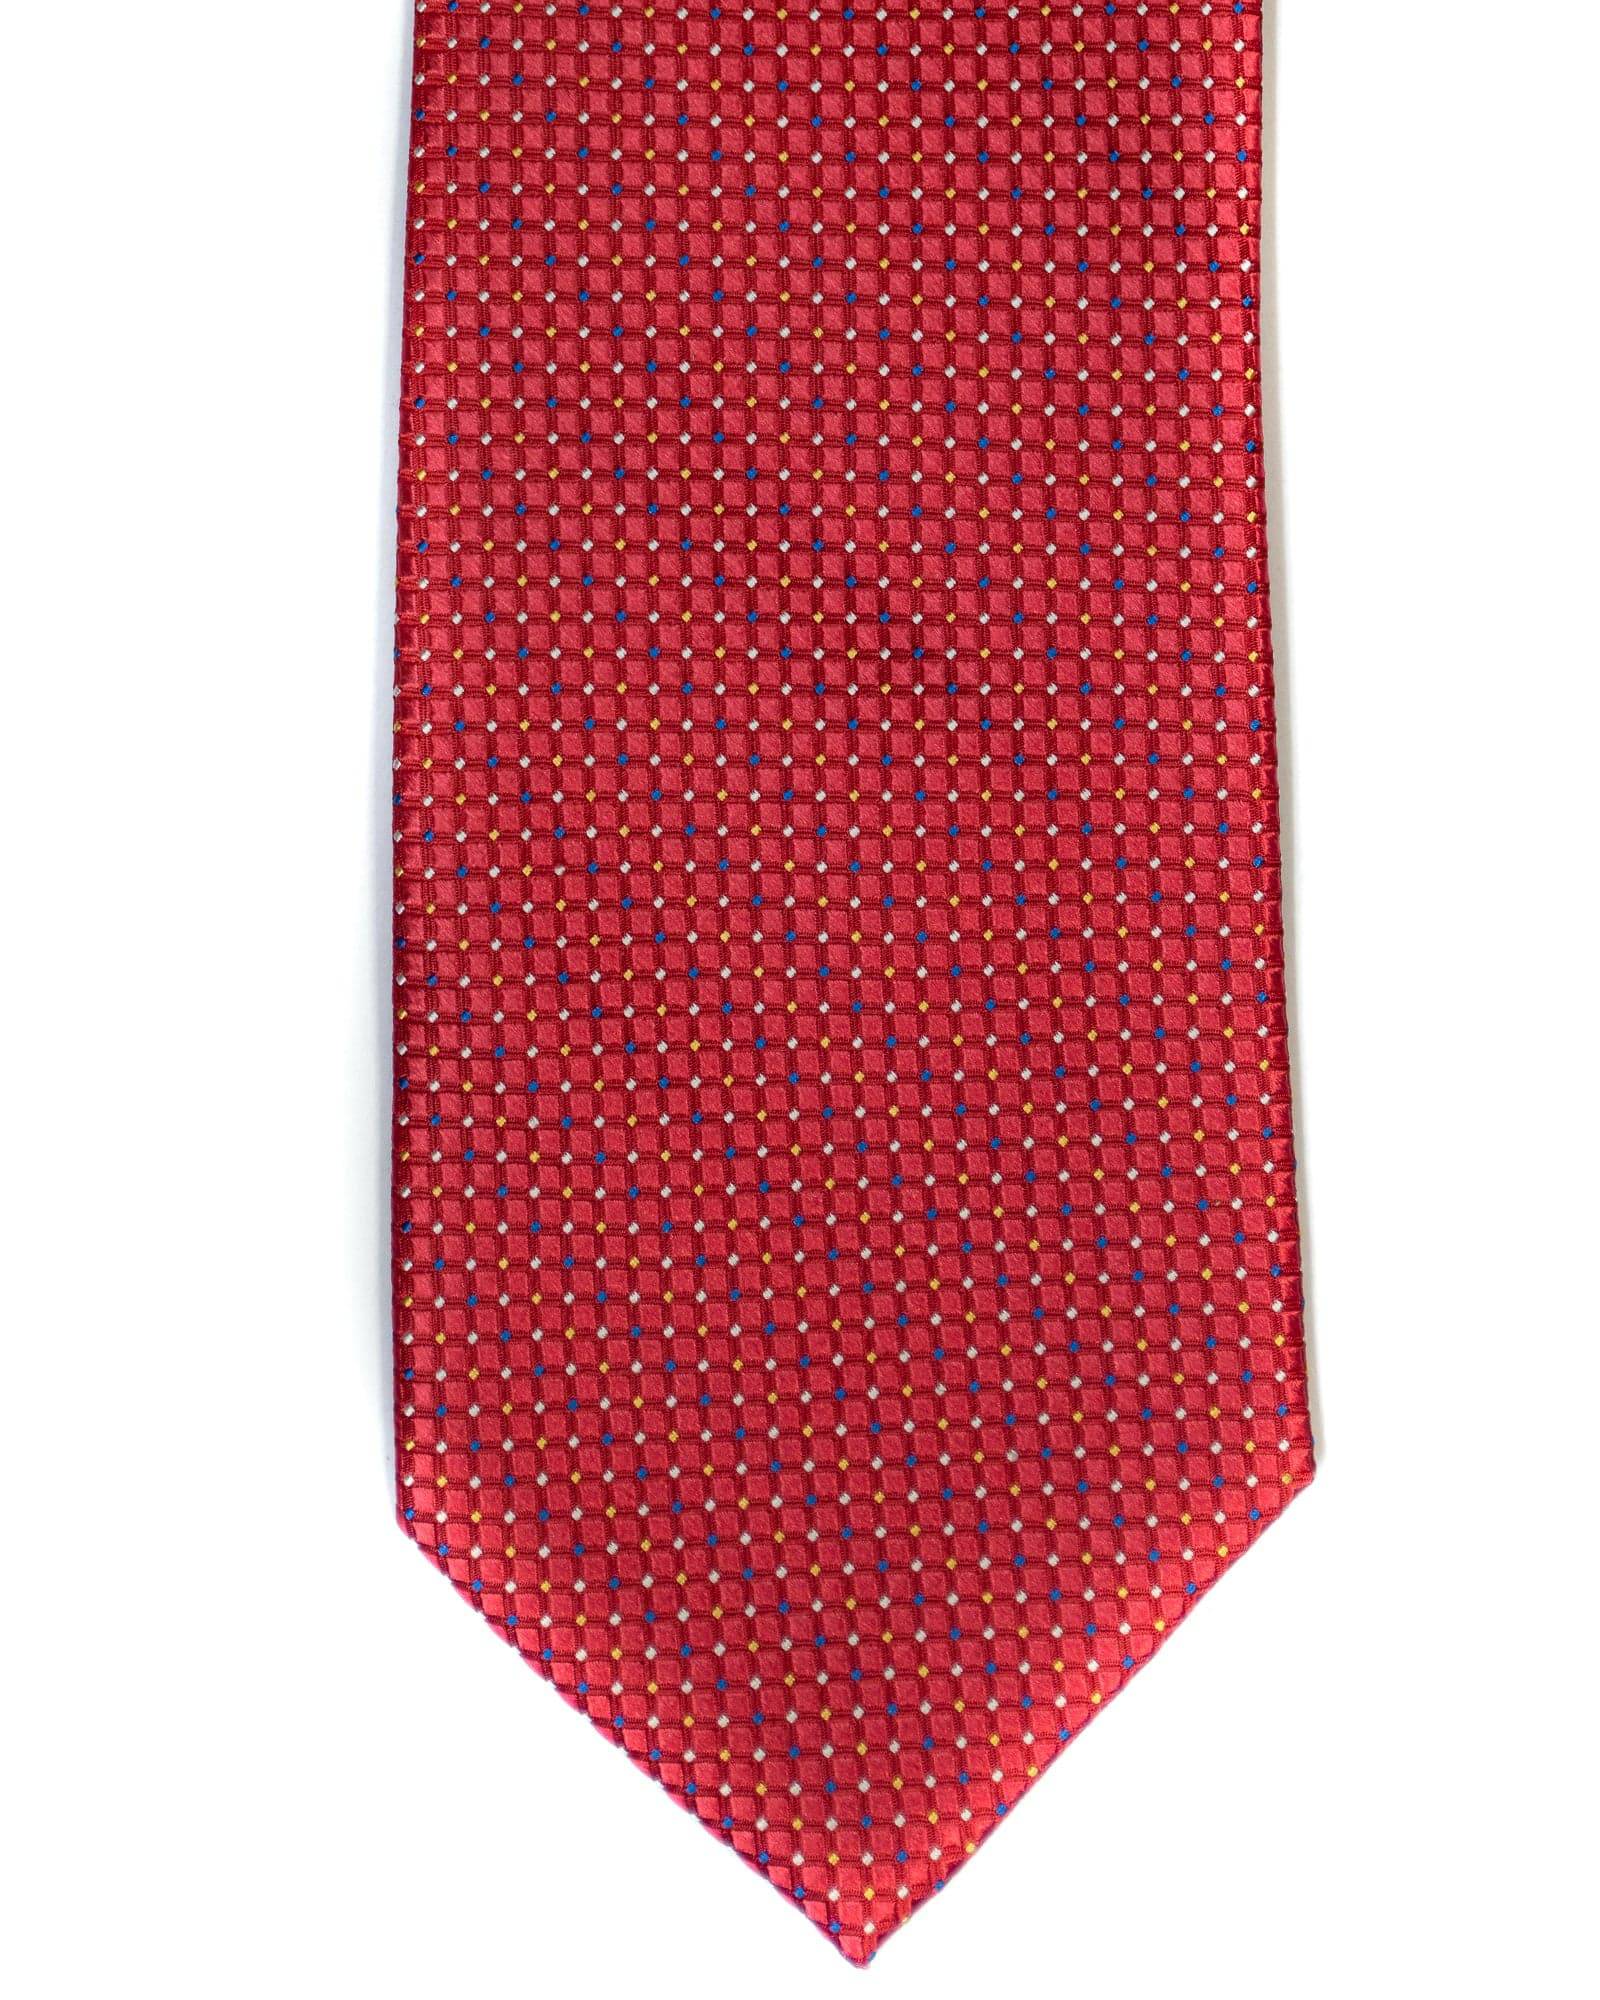 Silk Tie In Salmon Red Neat Foulard Print - Rainwater's Men's Clothing and Tuxedo Rental